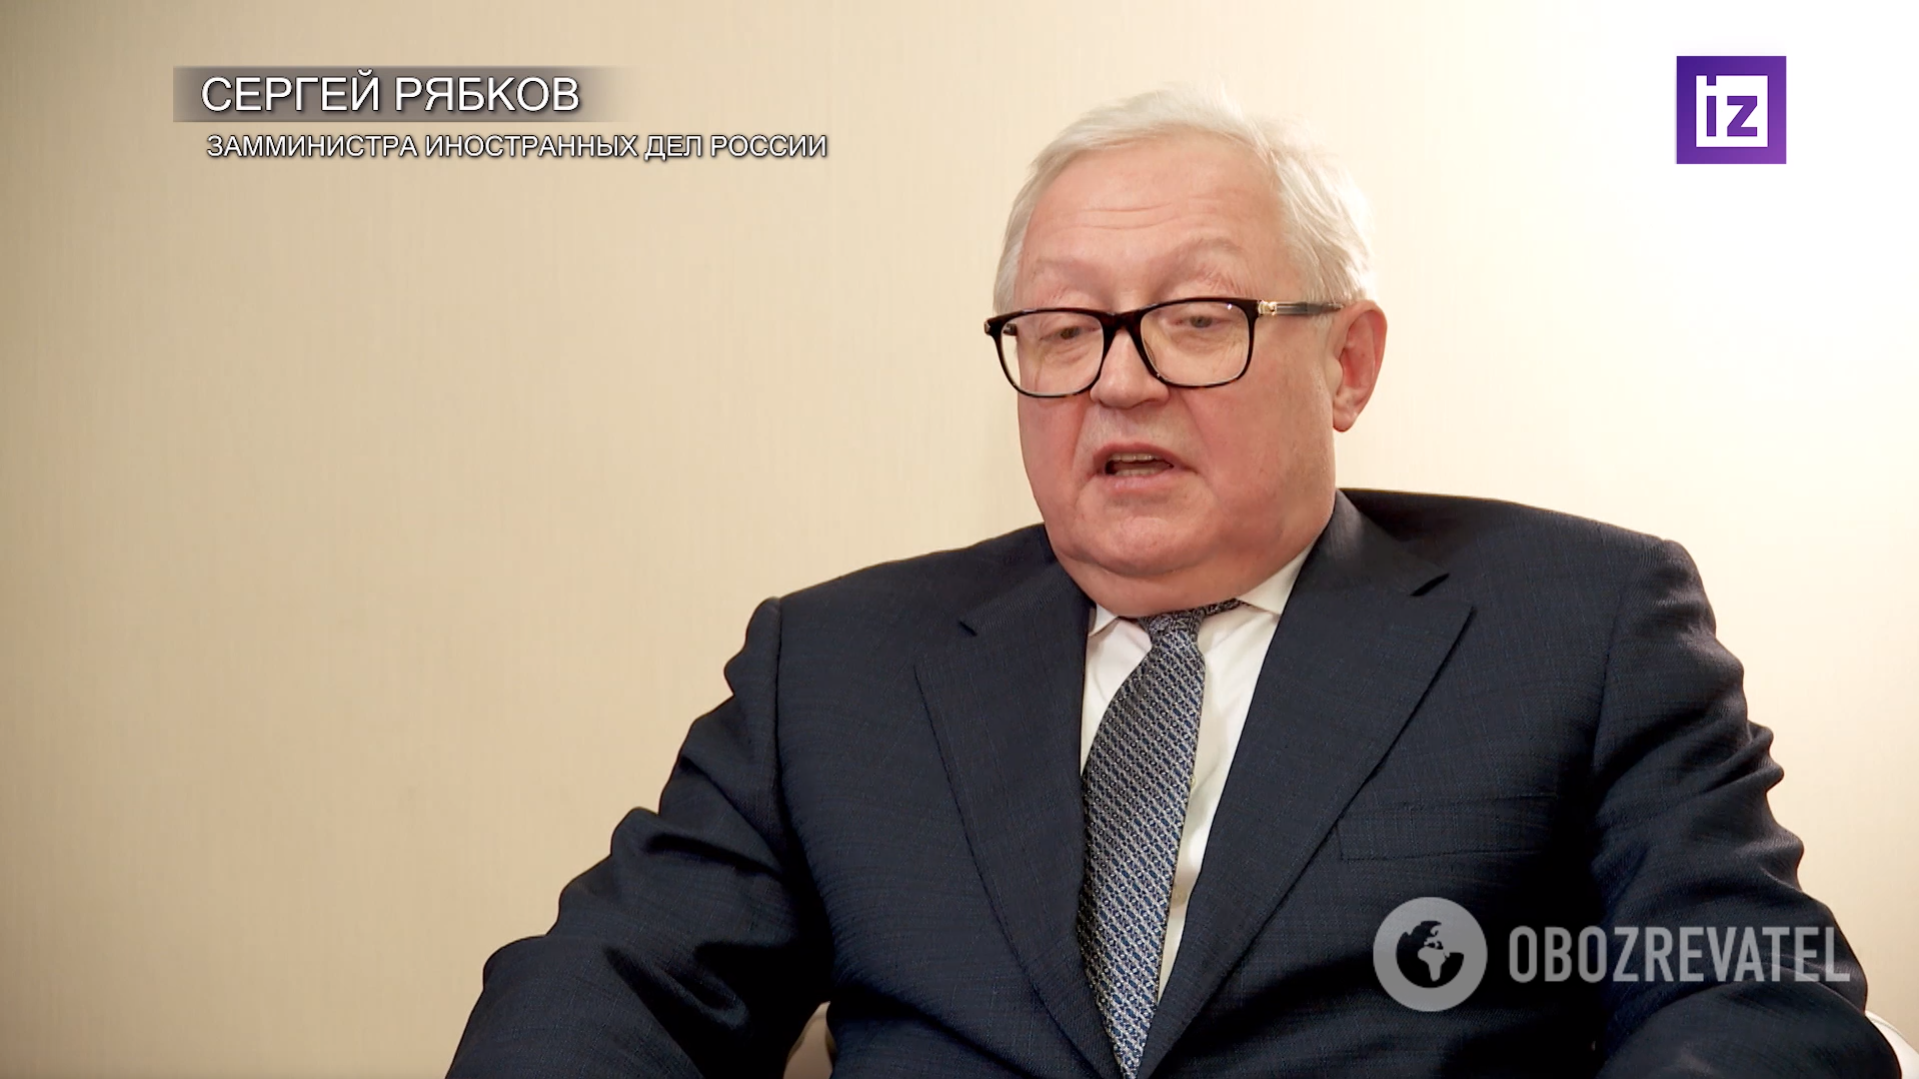 Sergey Ryabkov in an interview with propagandists